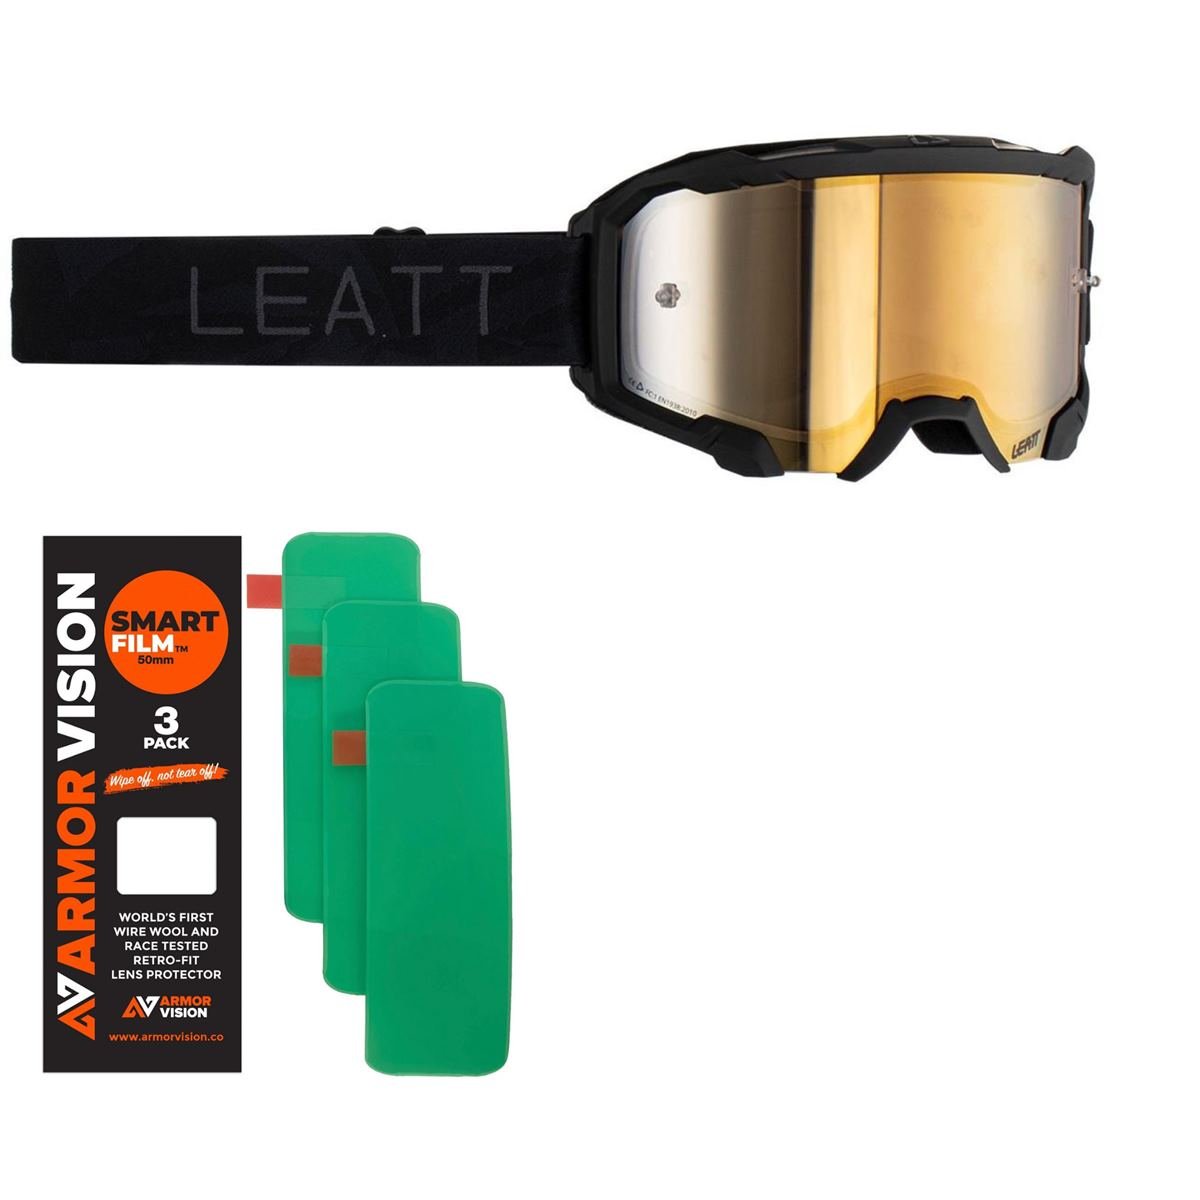 Leatt Crossbrille Velocity 4.5 Set: 2-teilig, Stealth + Smart Film Lens Protector